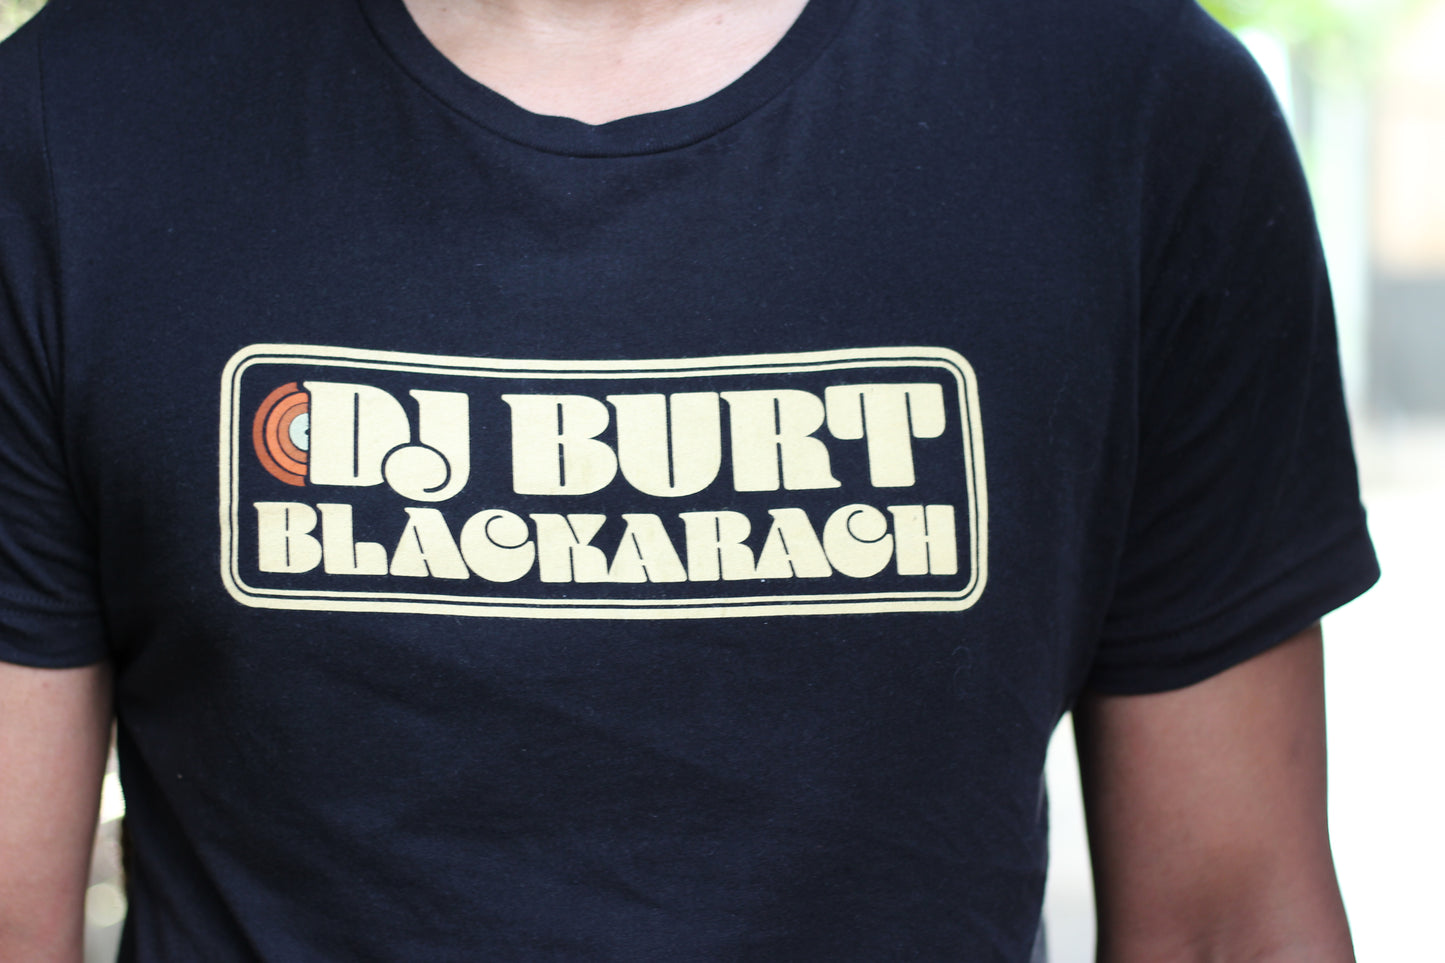 DJ Burt Blackarach - Black with Yellow Font